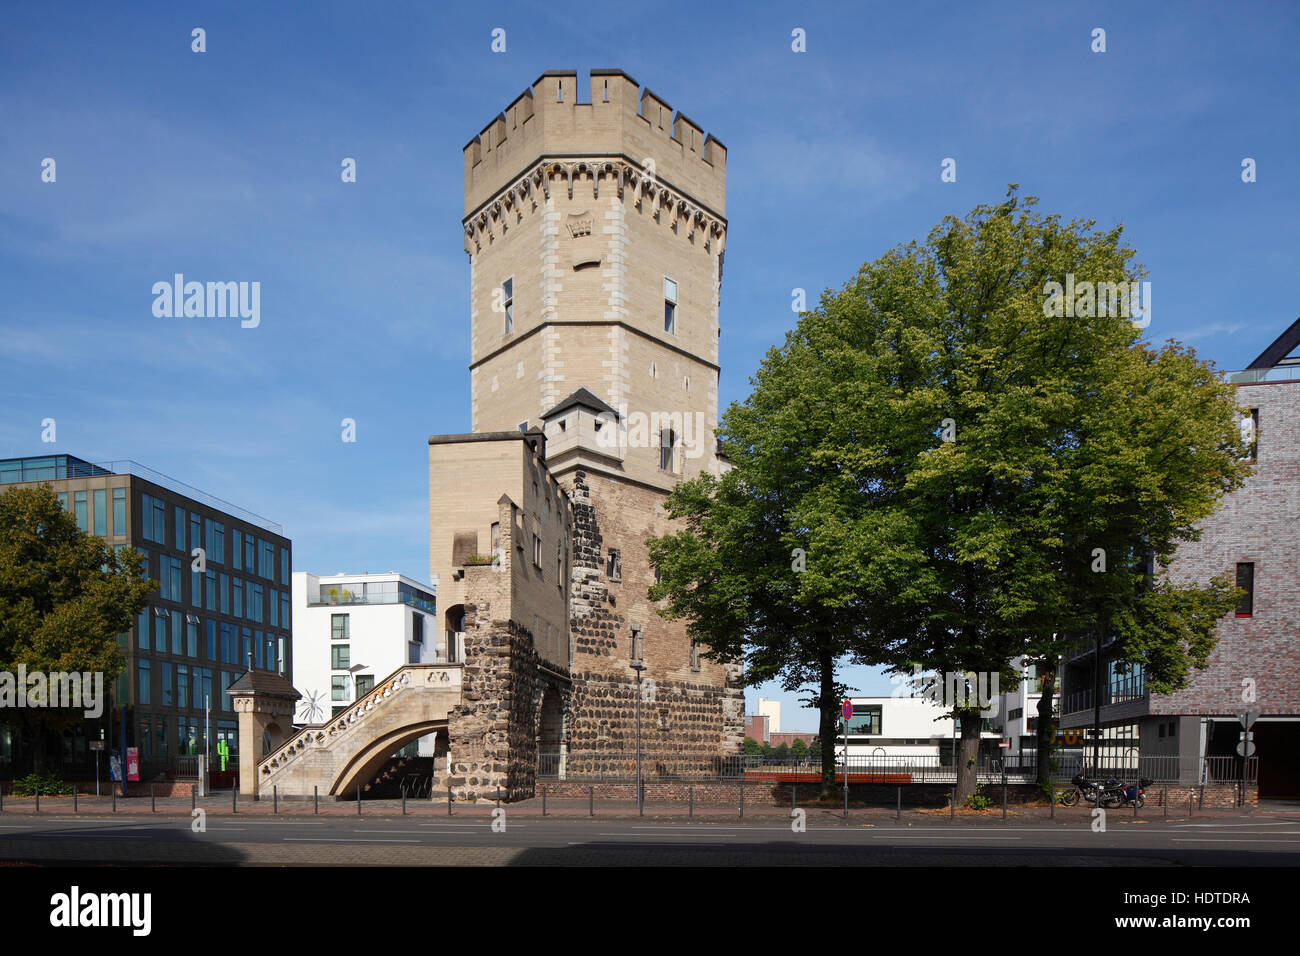 Bayenturm torre de defensa medieval, Cologne-Bayenthal, Rheinauhafen, Colonia, Renania del Norte-Westfalia, Alemania Foto de stock